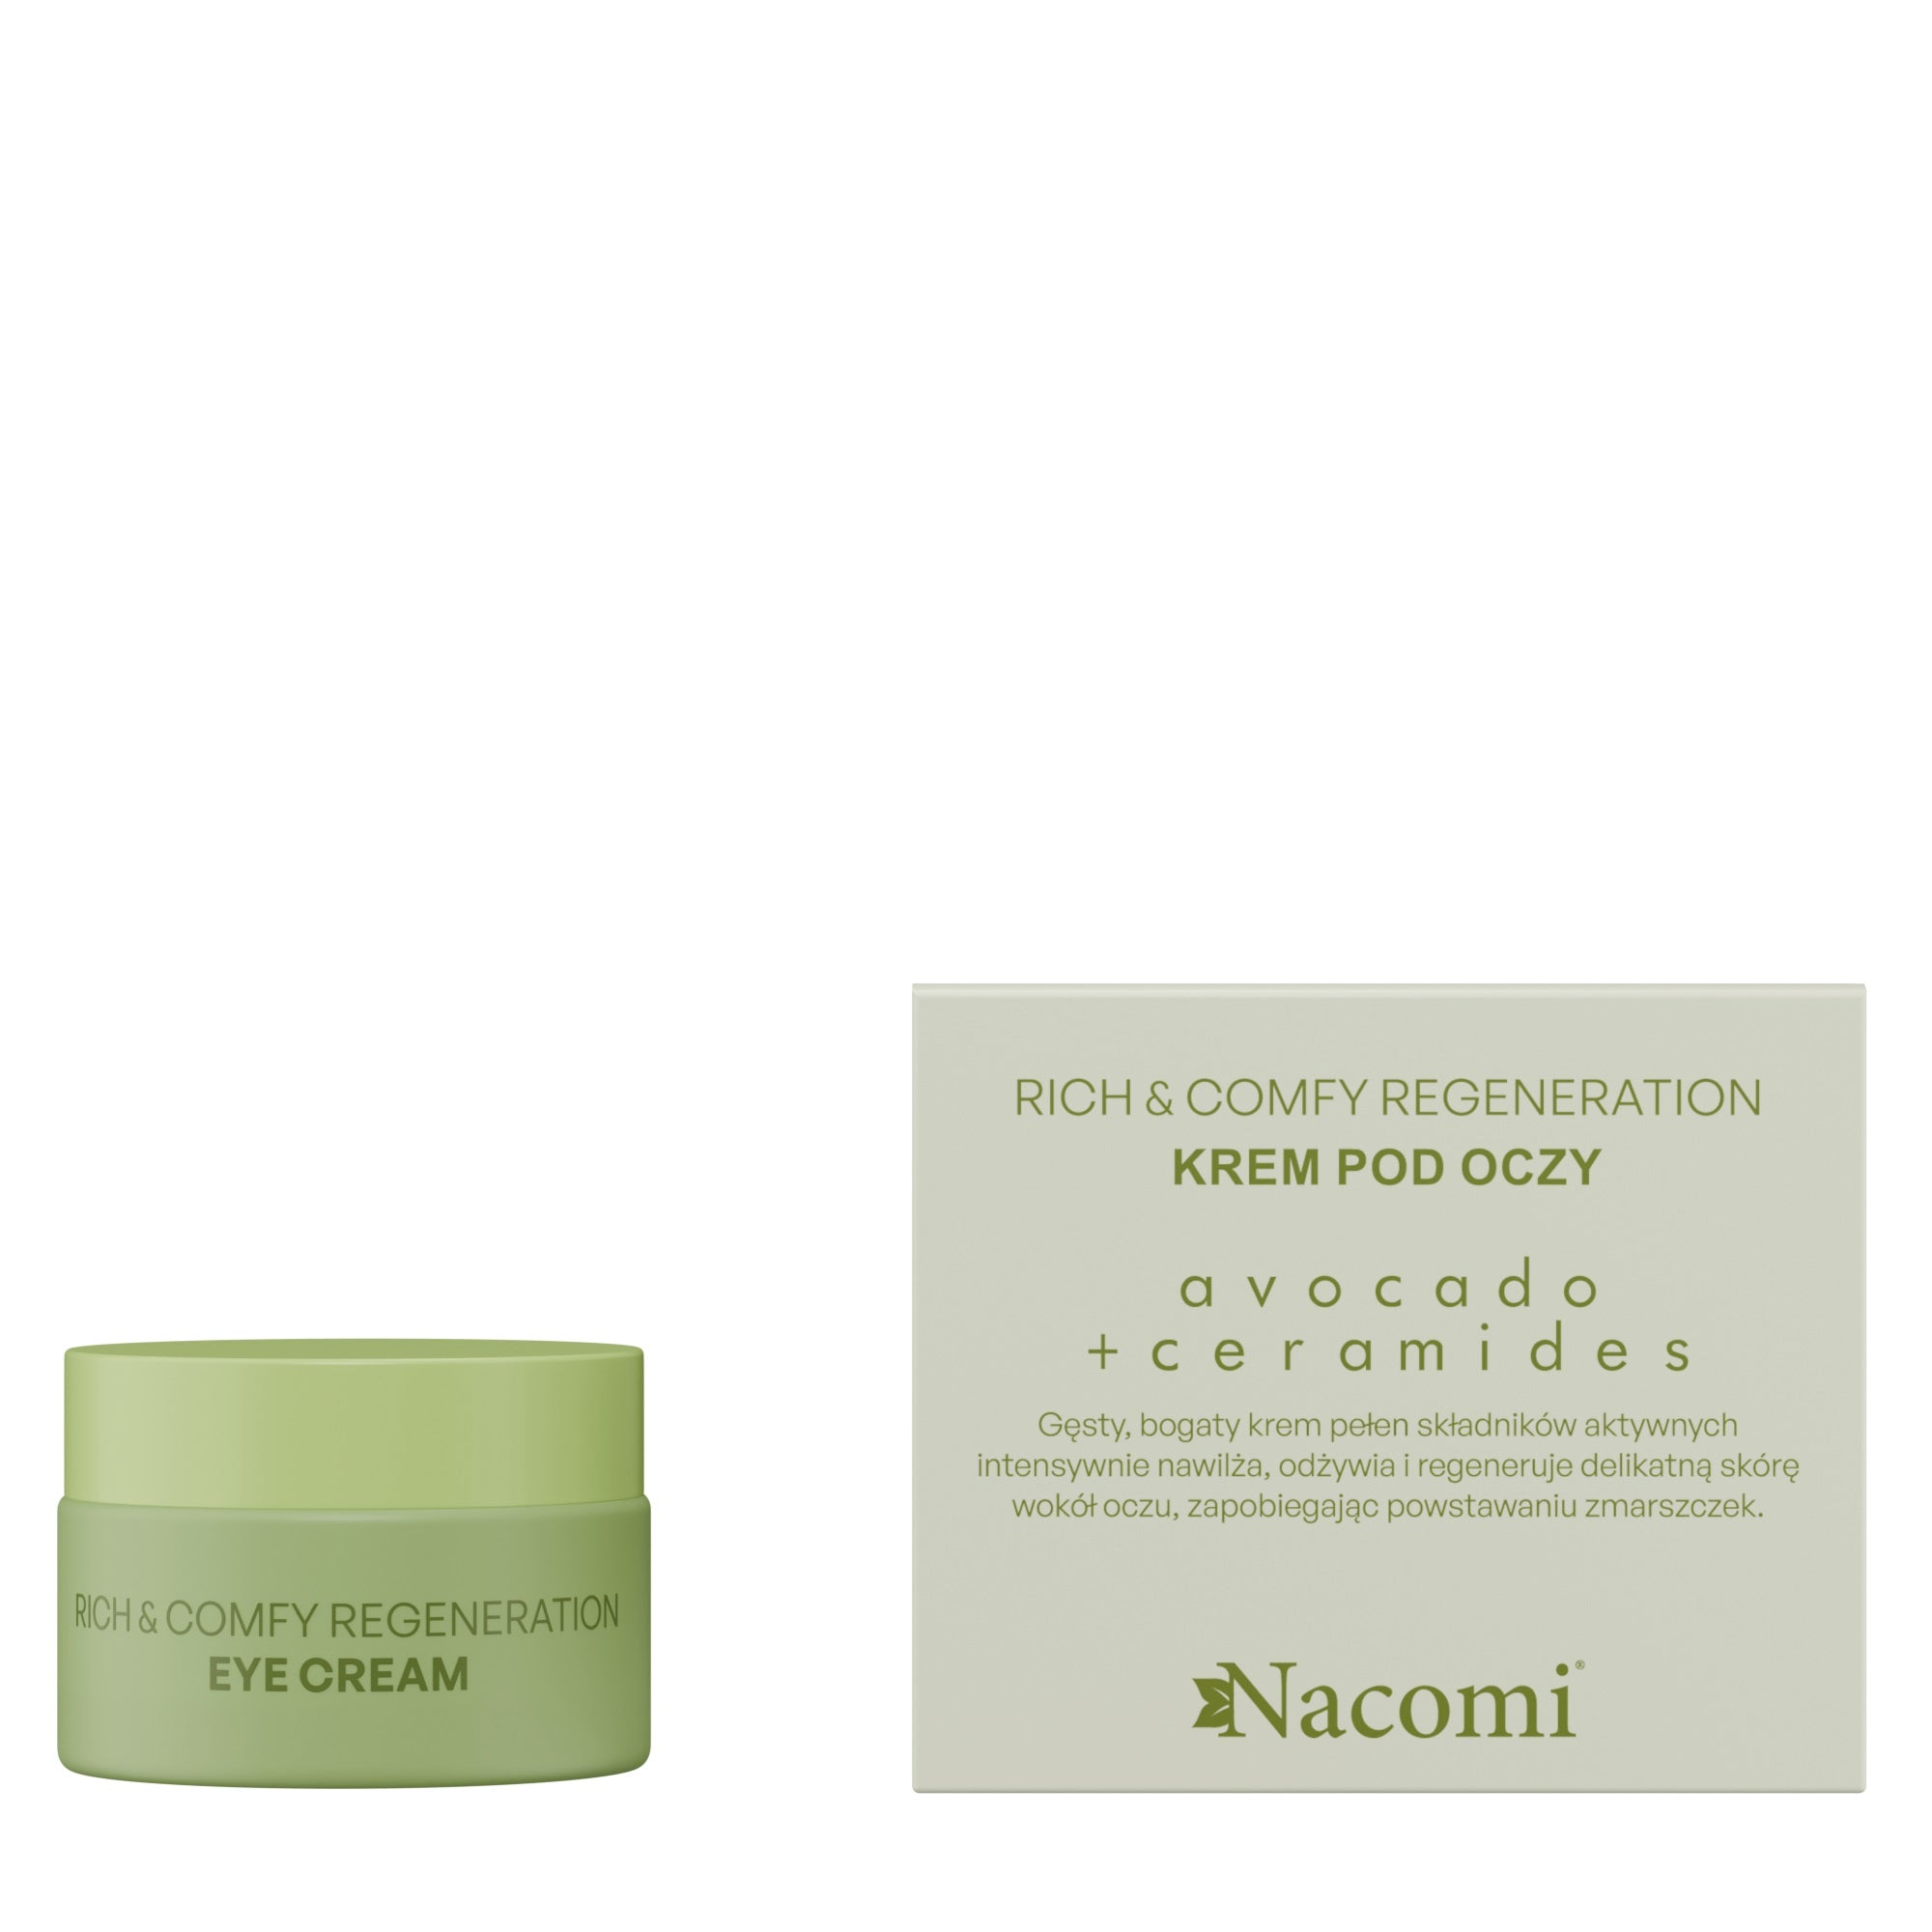 Nacomi  Rich & comfy regeneration AVOCADO + CERAMIDES Eye Cream 15ml